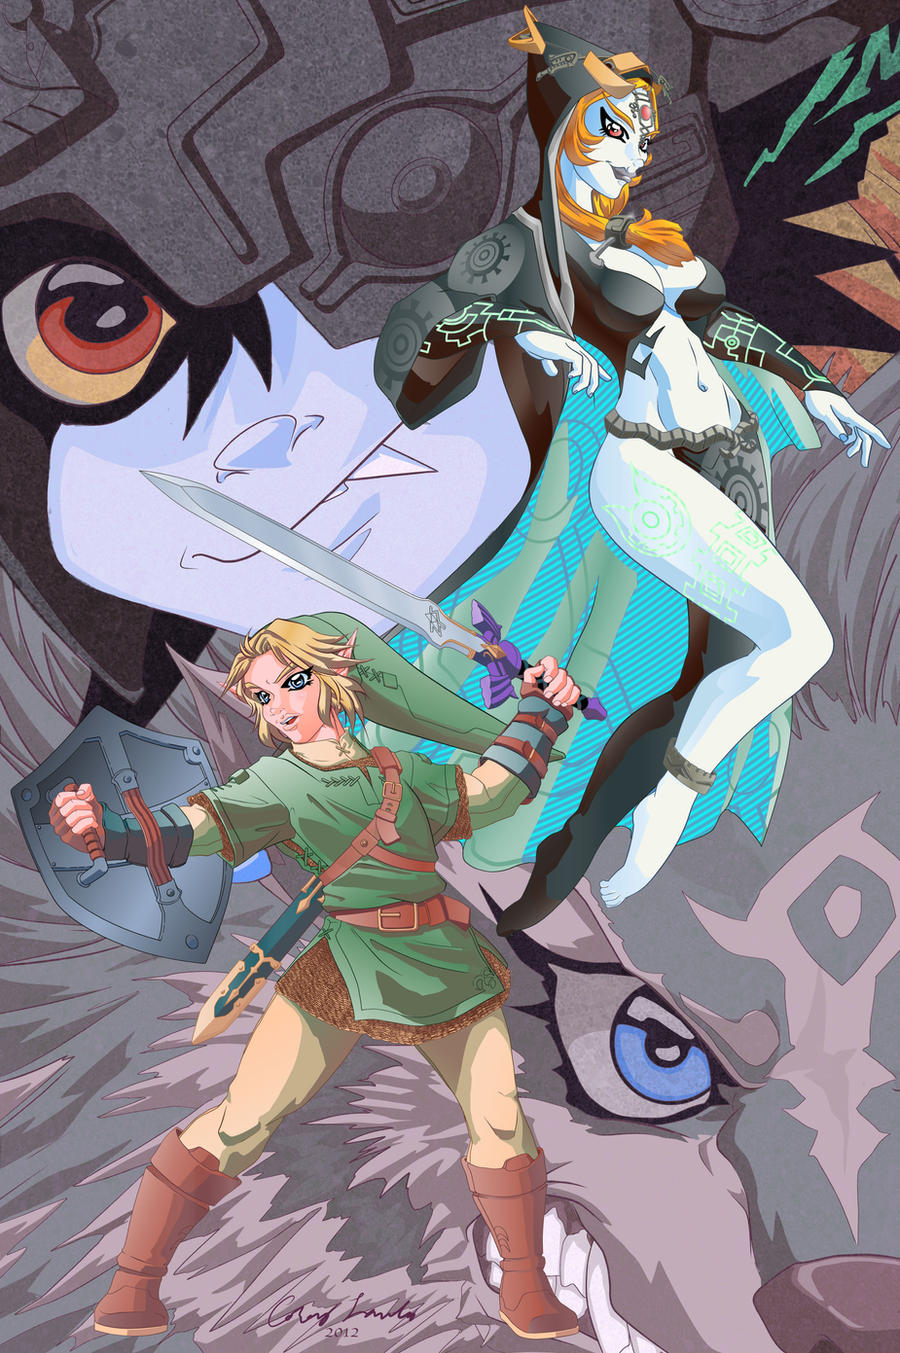 Legend of Zelda Twilight Princess by coreylandis on DeviantArt.